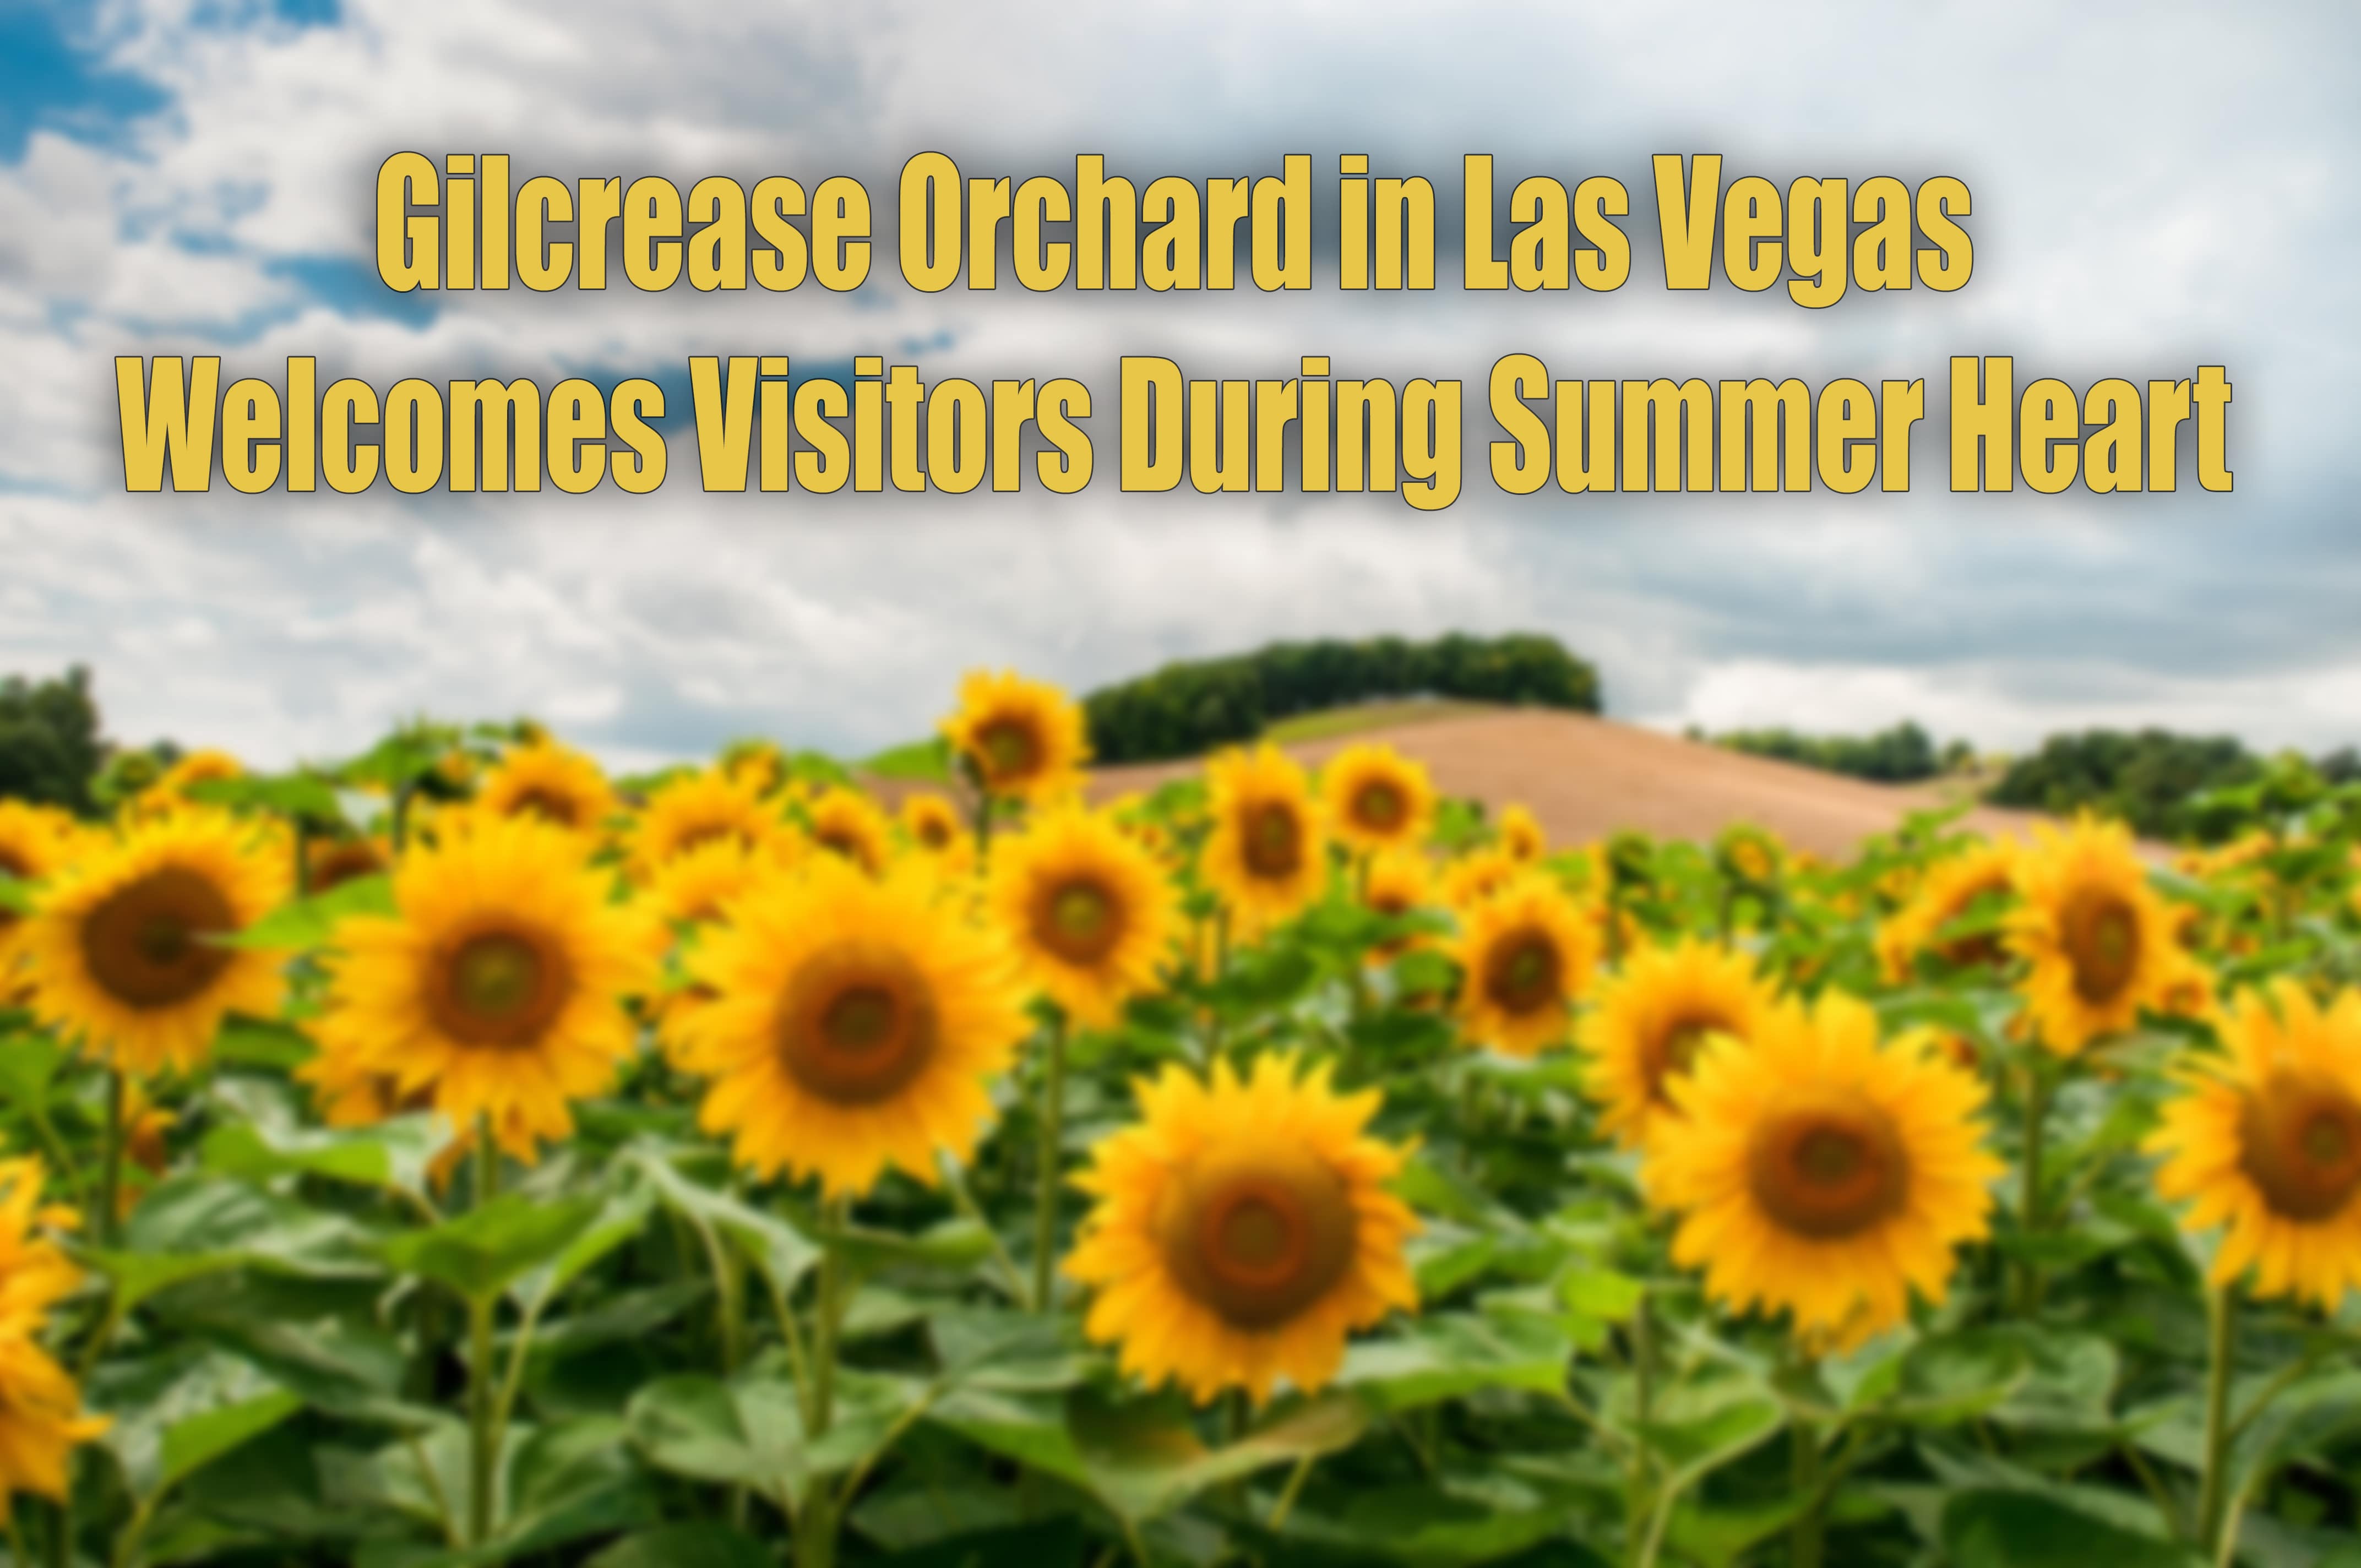 Gilcrease Orchard Las Vegas.jpg